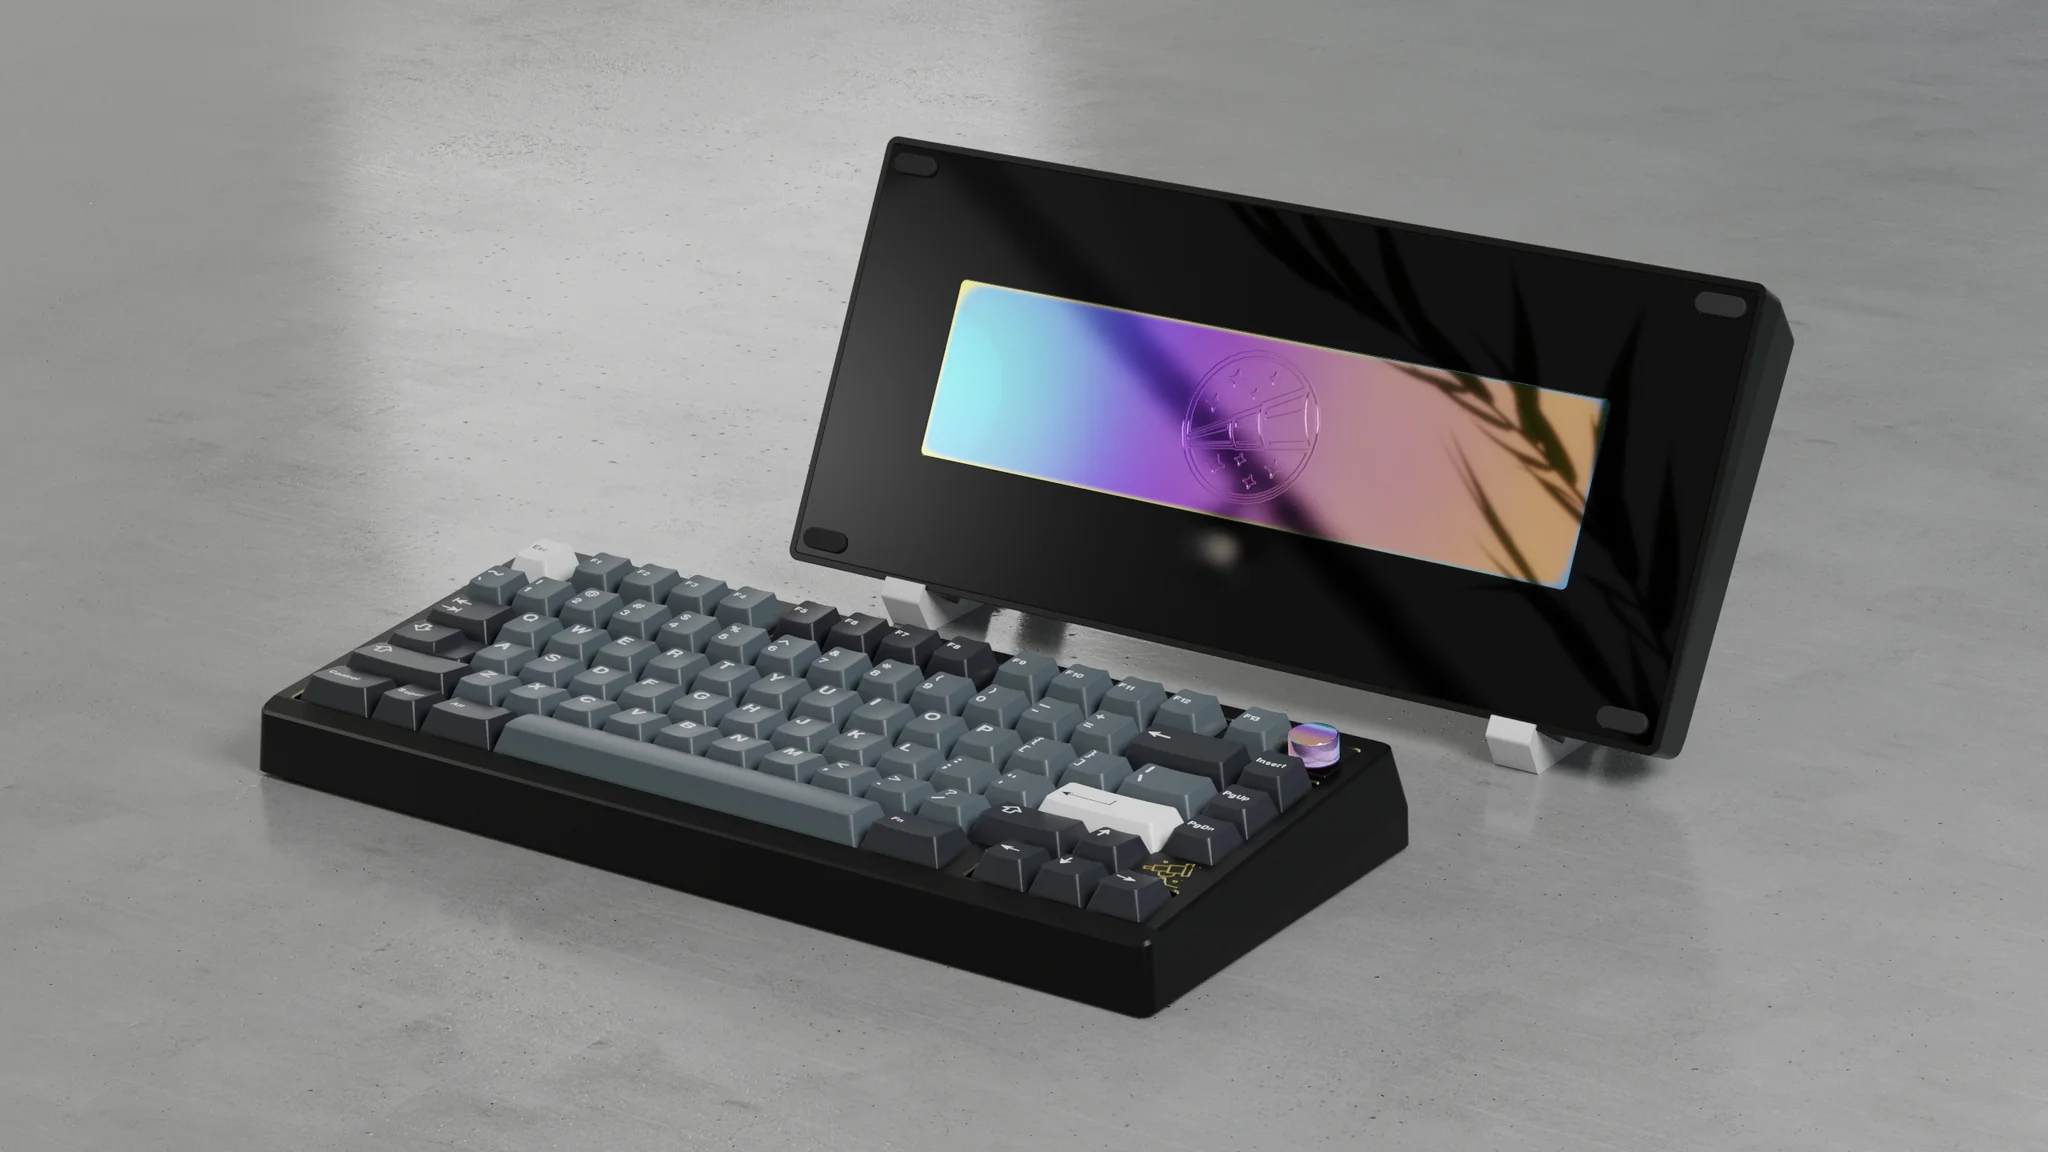 [Group-Buy] Meletrix Zoom75 Special Edition (SE) - Barebones Keyboard Kit - Anodized Black